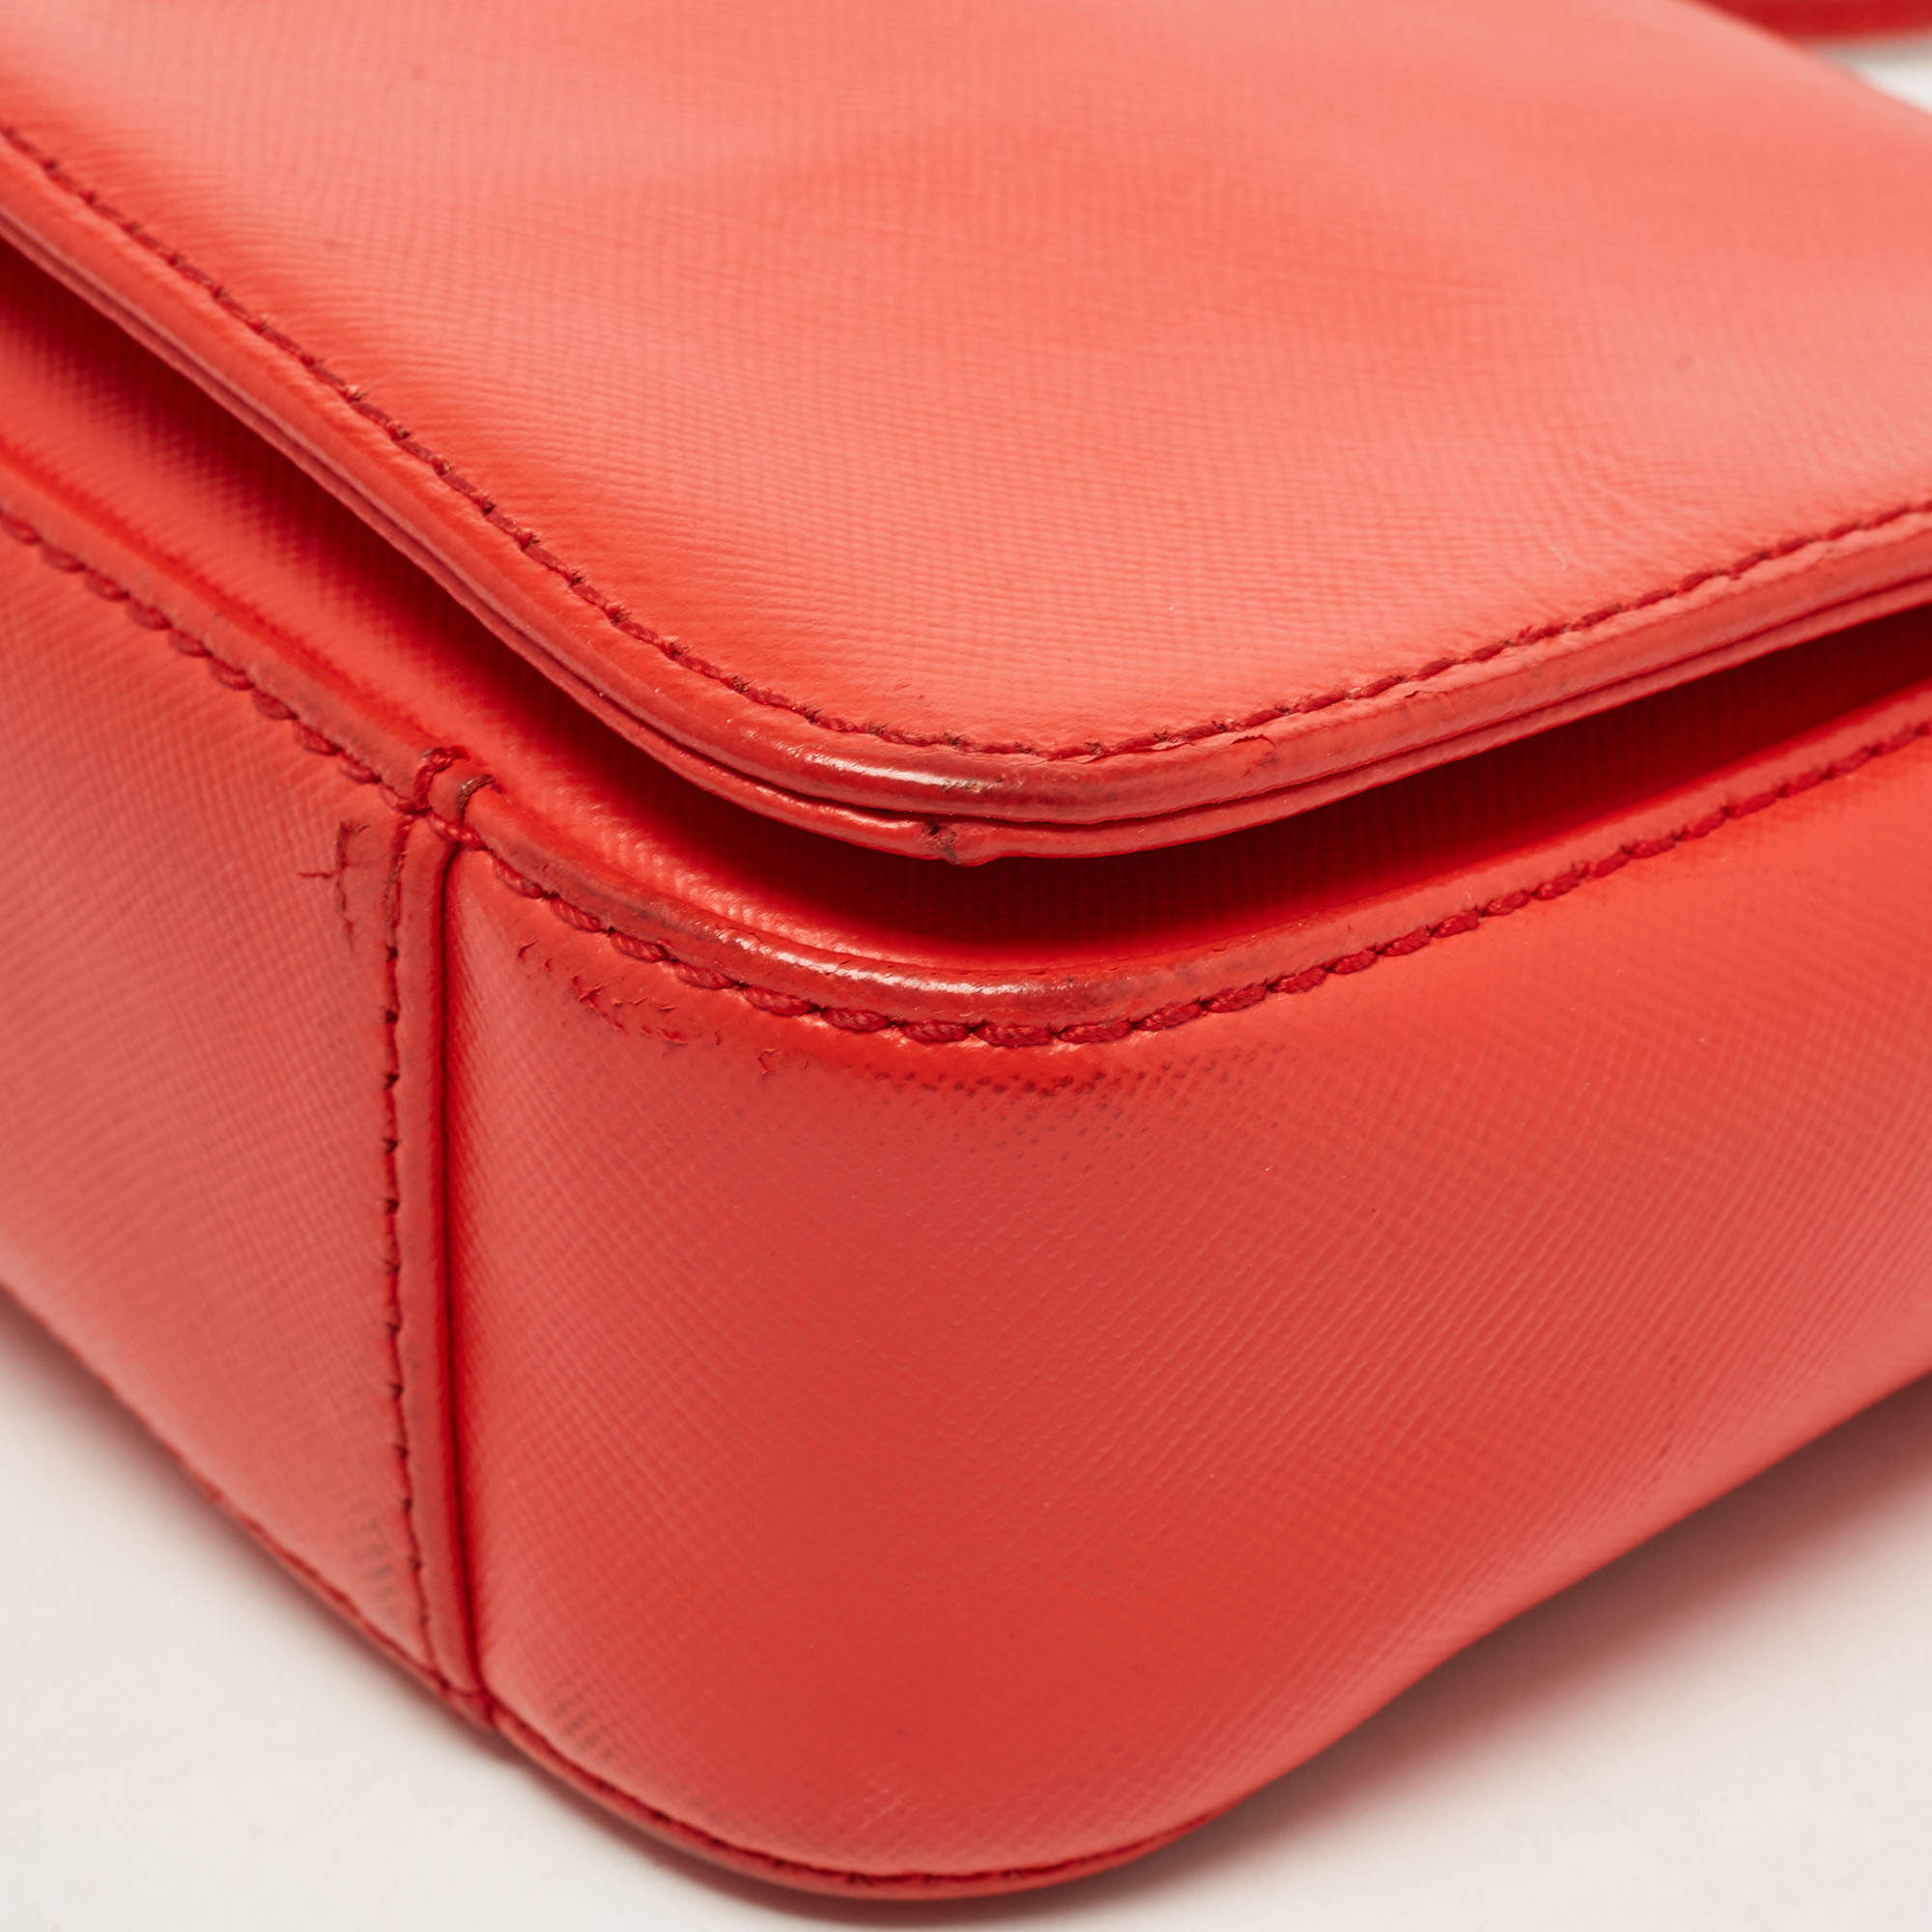 Tory Burch Orange Kira Mini gold chain bag purse | Chain bags, Purses and  bags, Bags